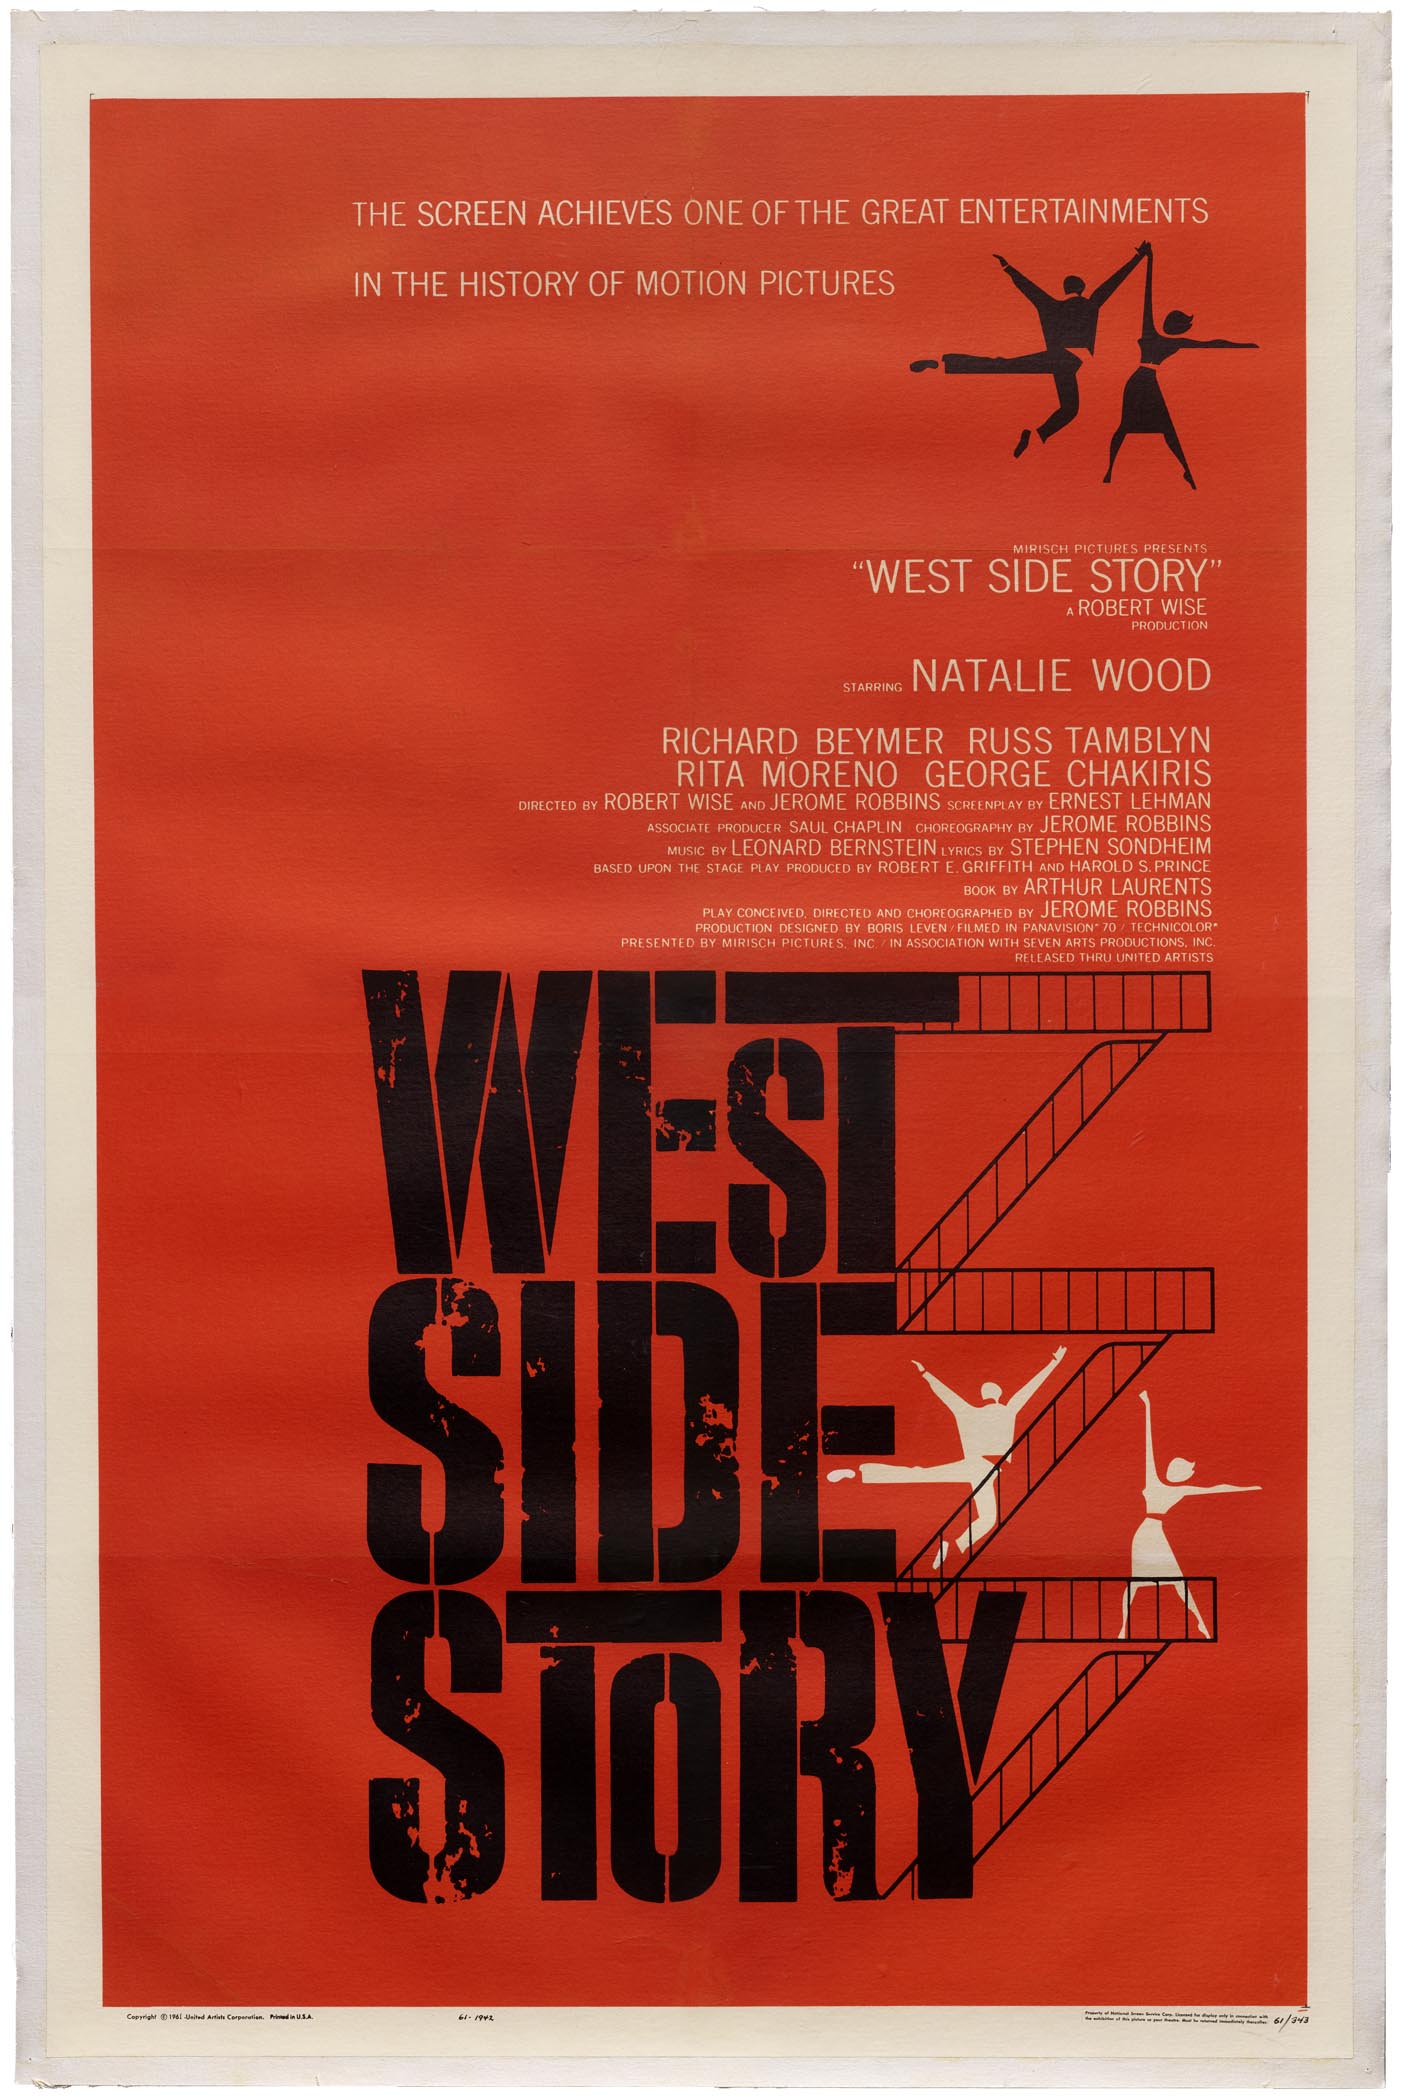 Joseph Caroff (not Saul Bass), West Side Story, 1961.